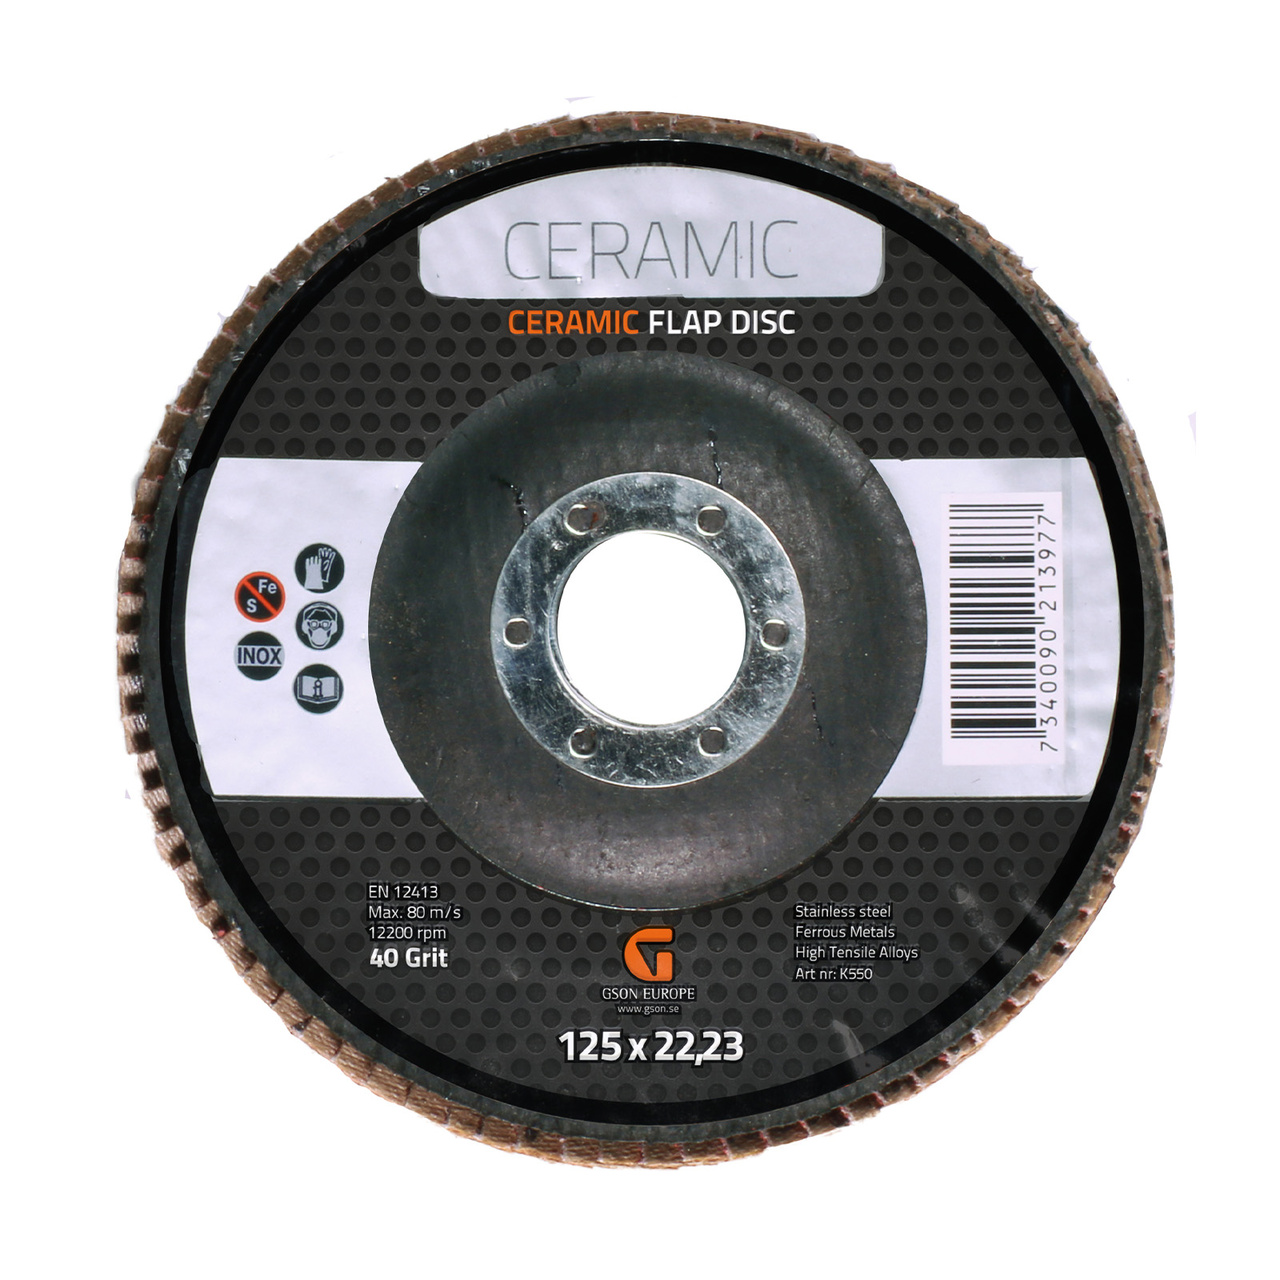 Ceramic Flap Disc 125x22,23, mm